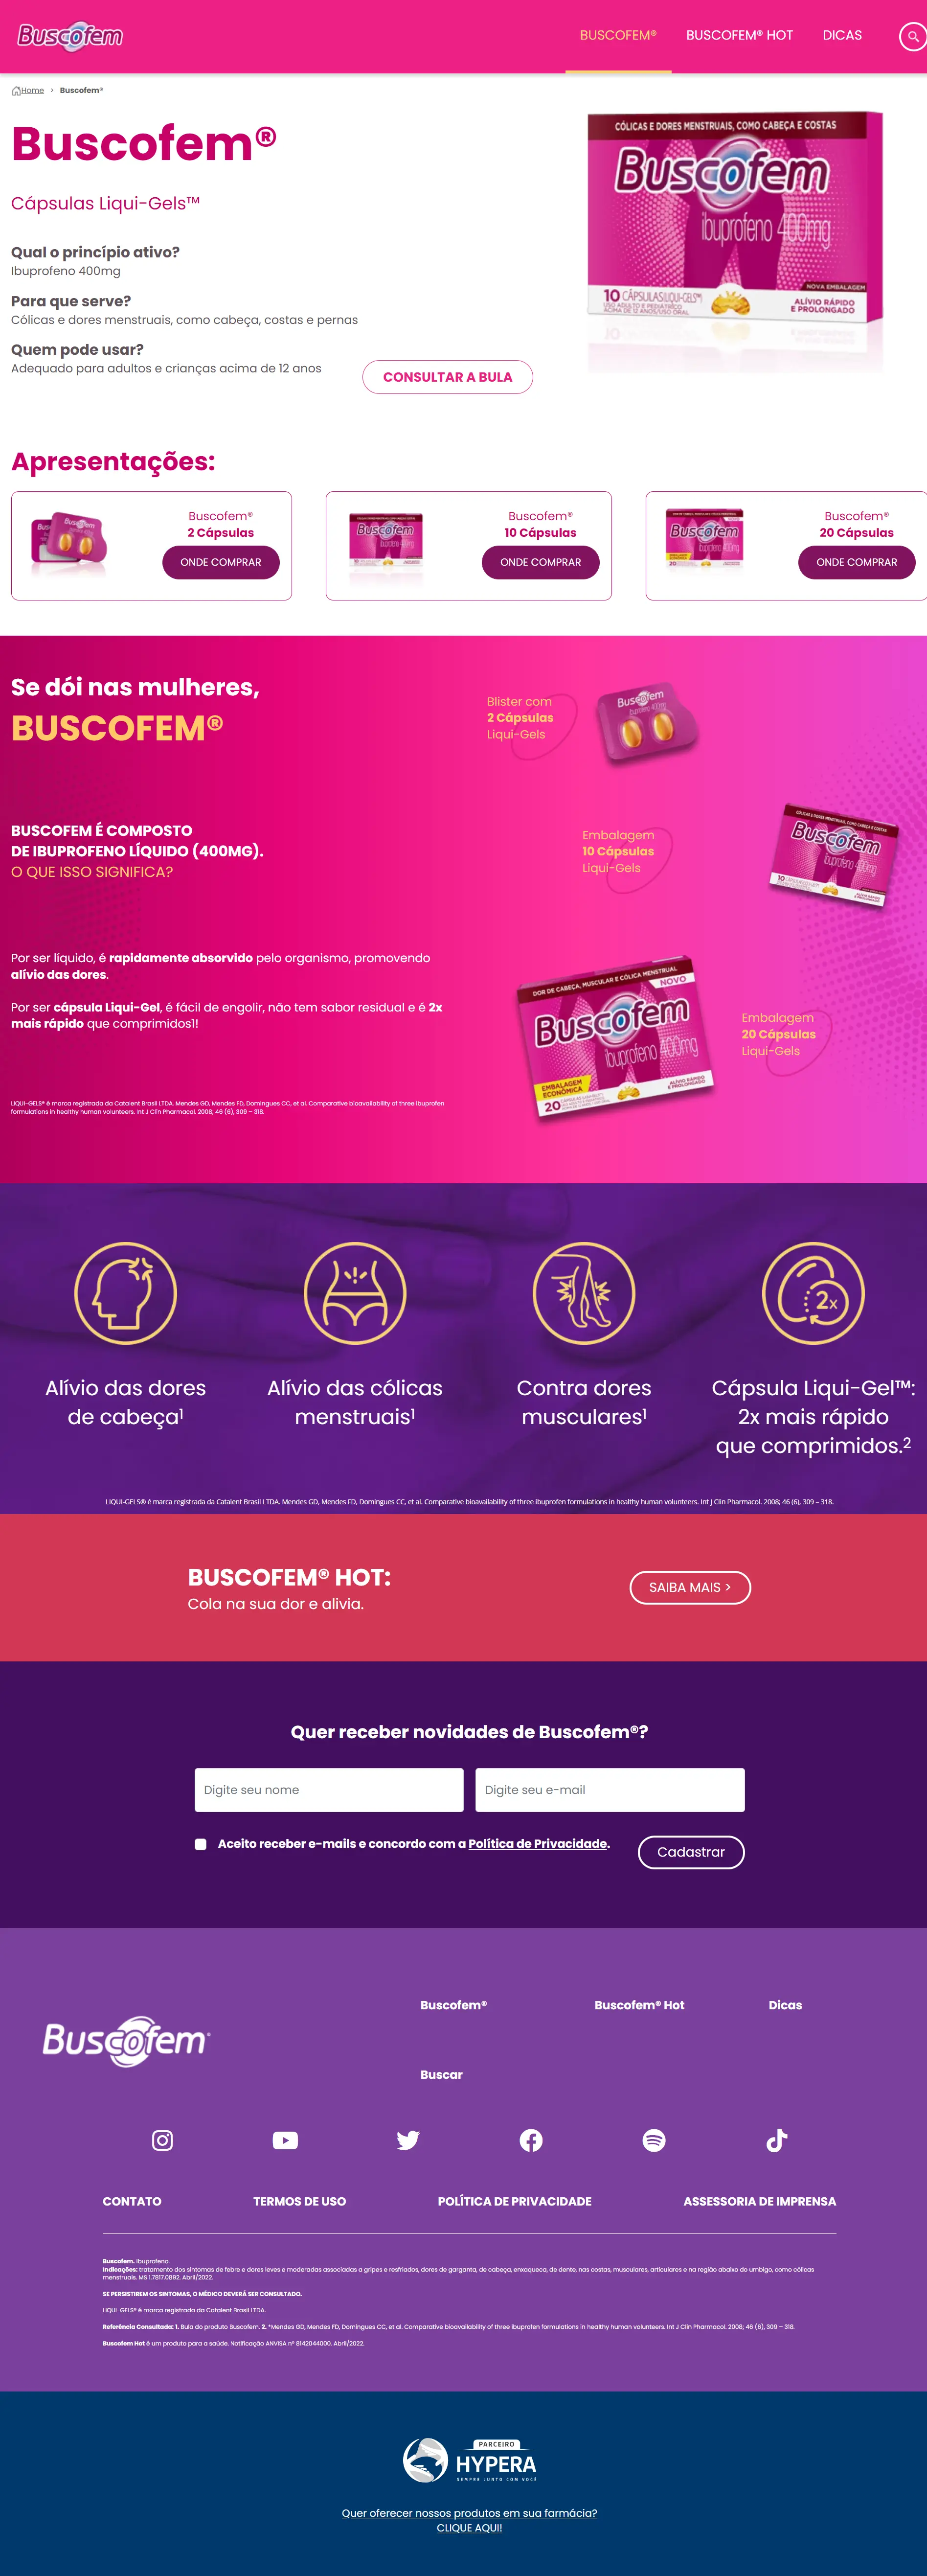 Product page screenshot of Buscofem.